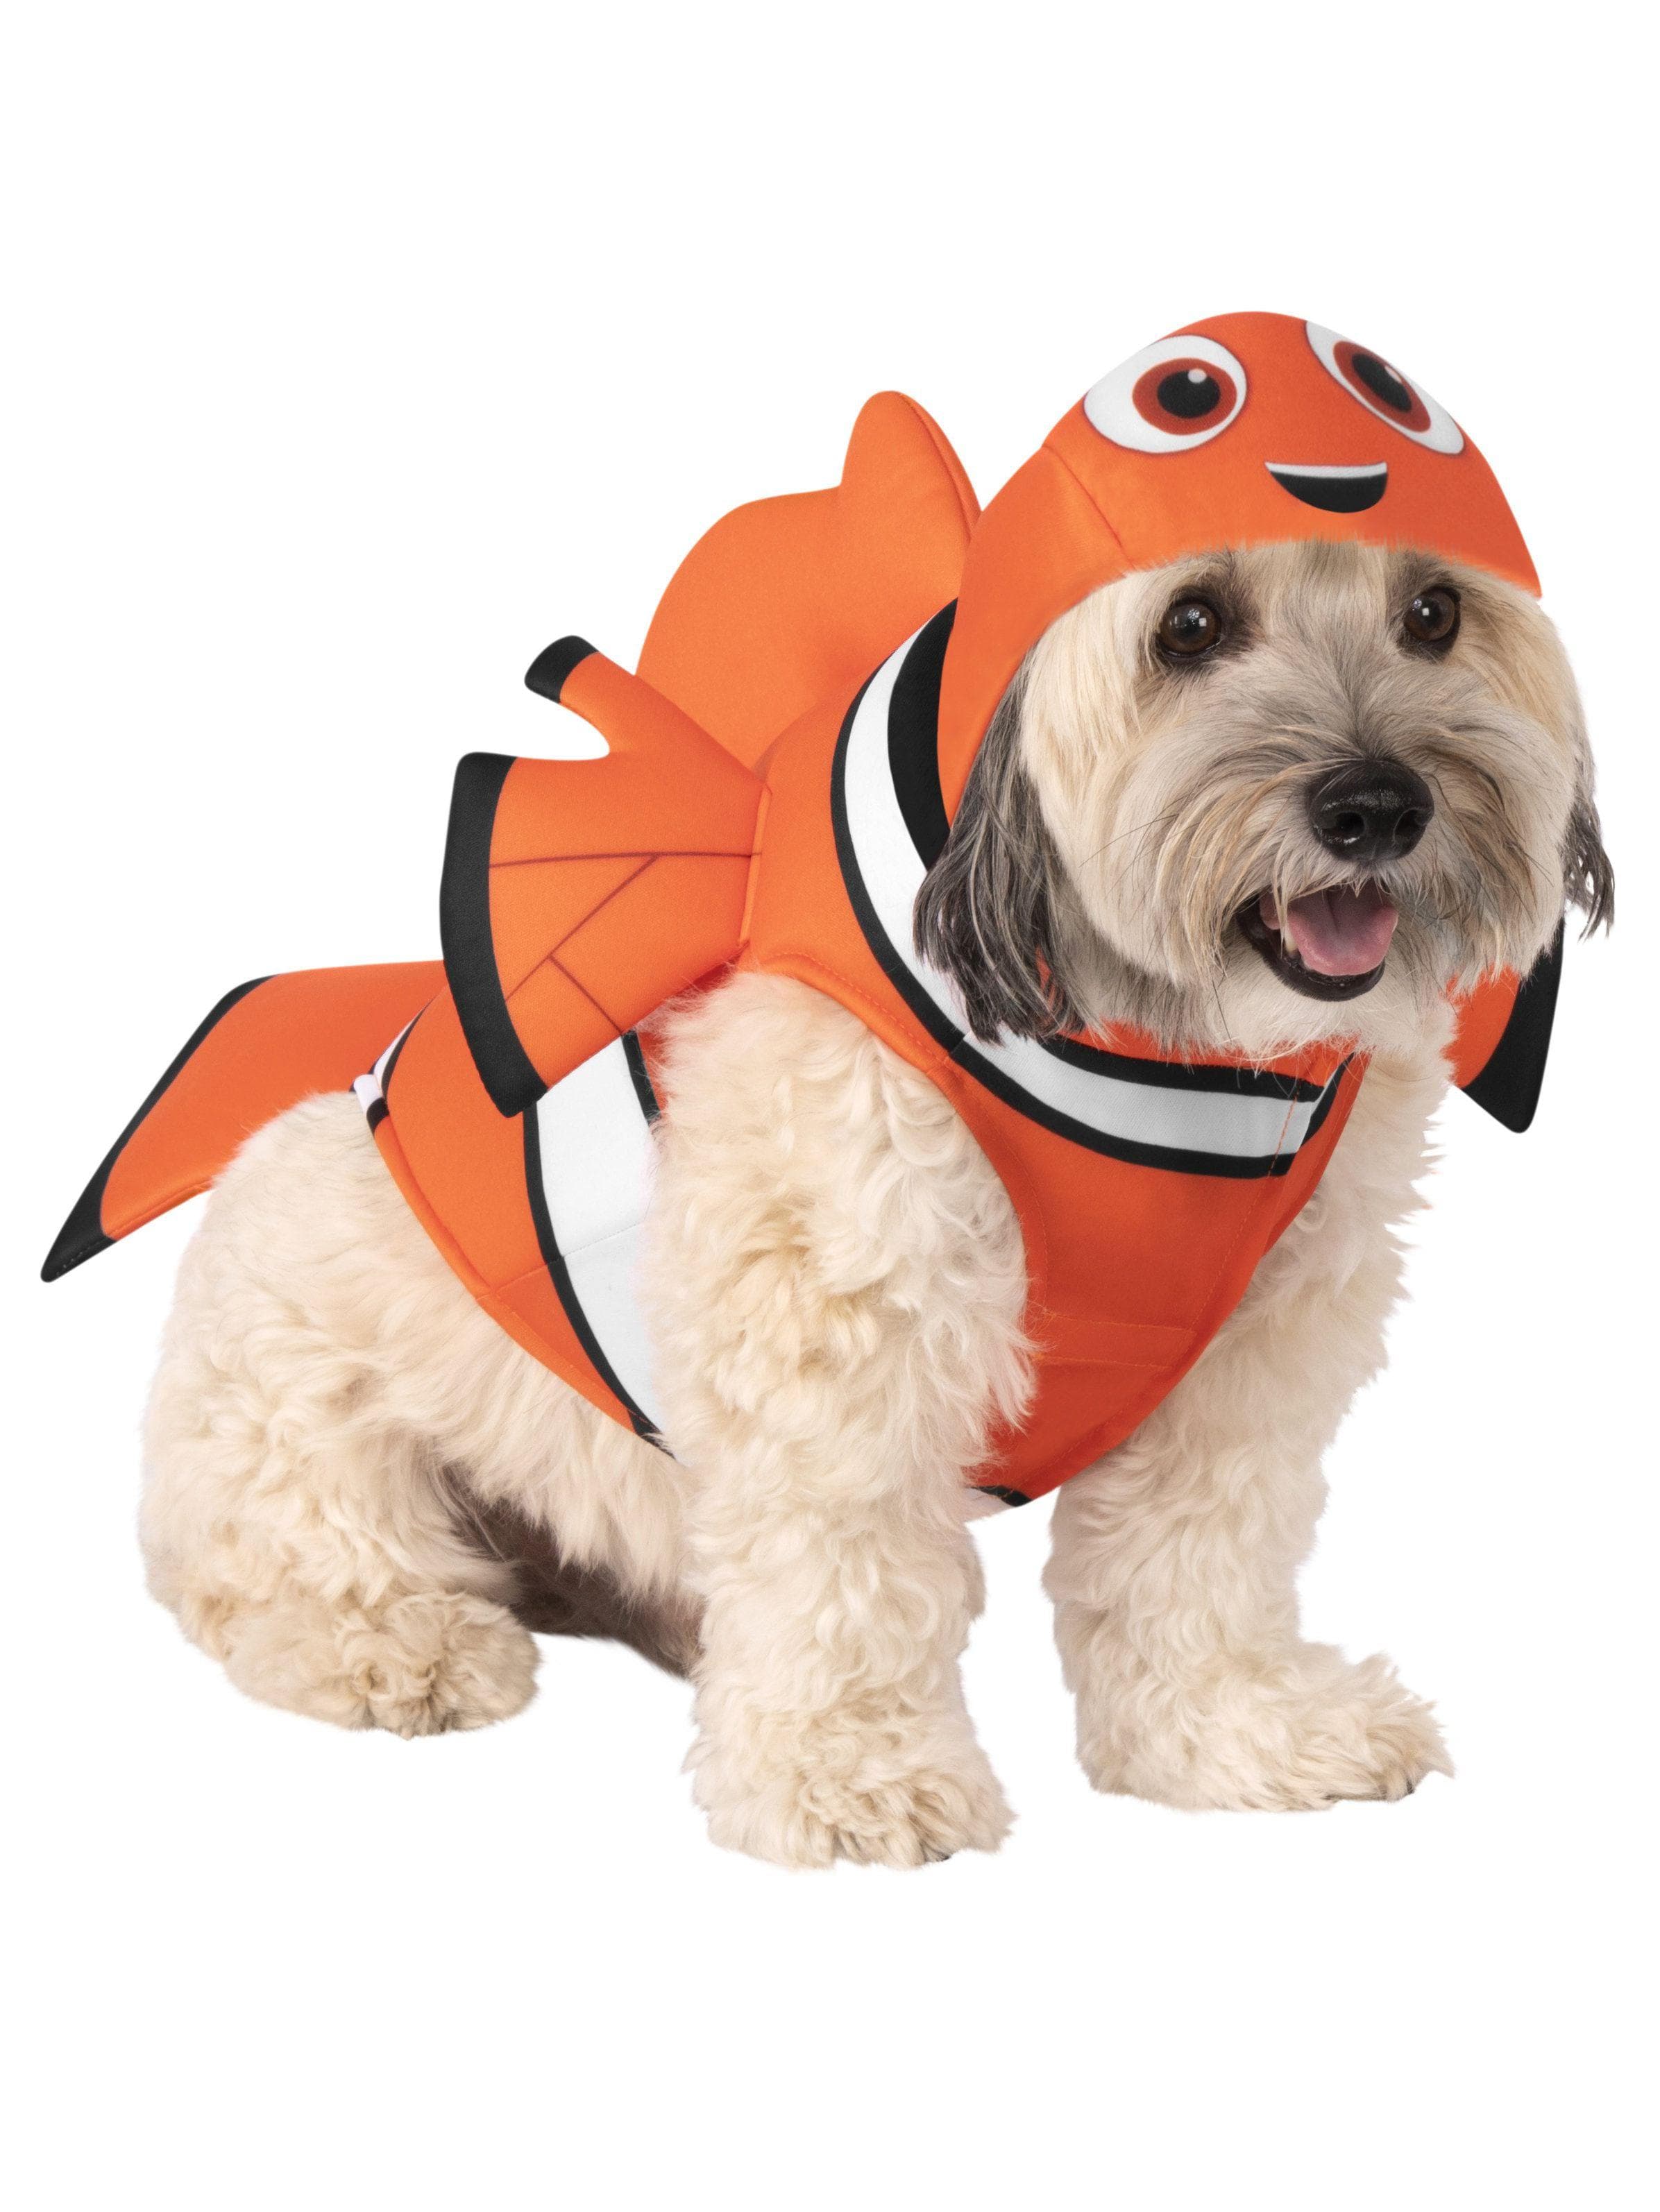 Finding Nemo - Nemo Pet Costume - costumes.com